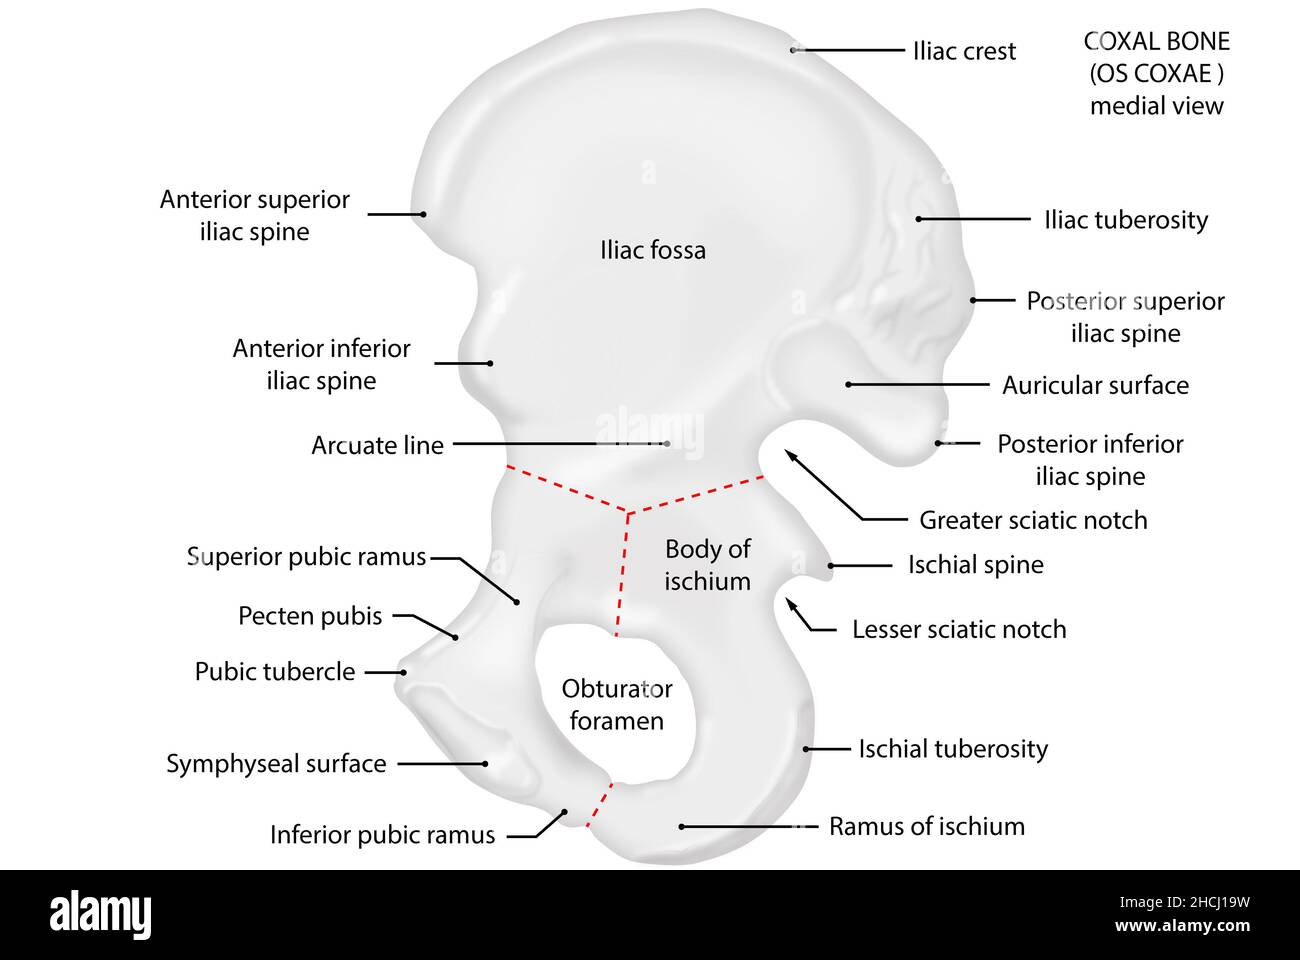 Os coxae, coxal bone, medial view, anatomy Stock Photo